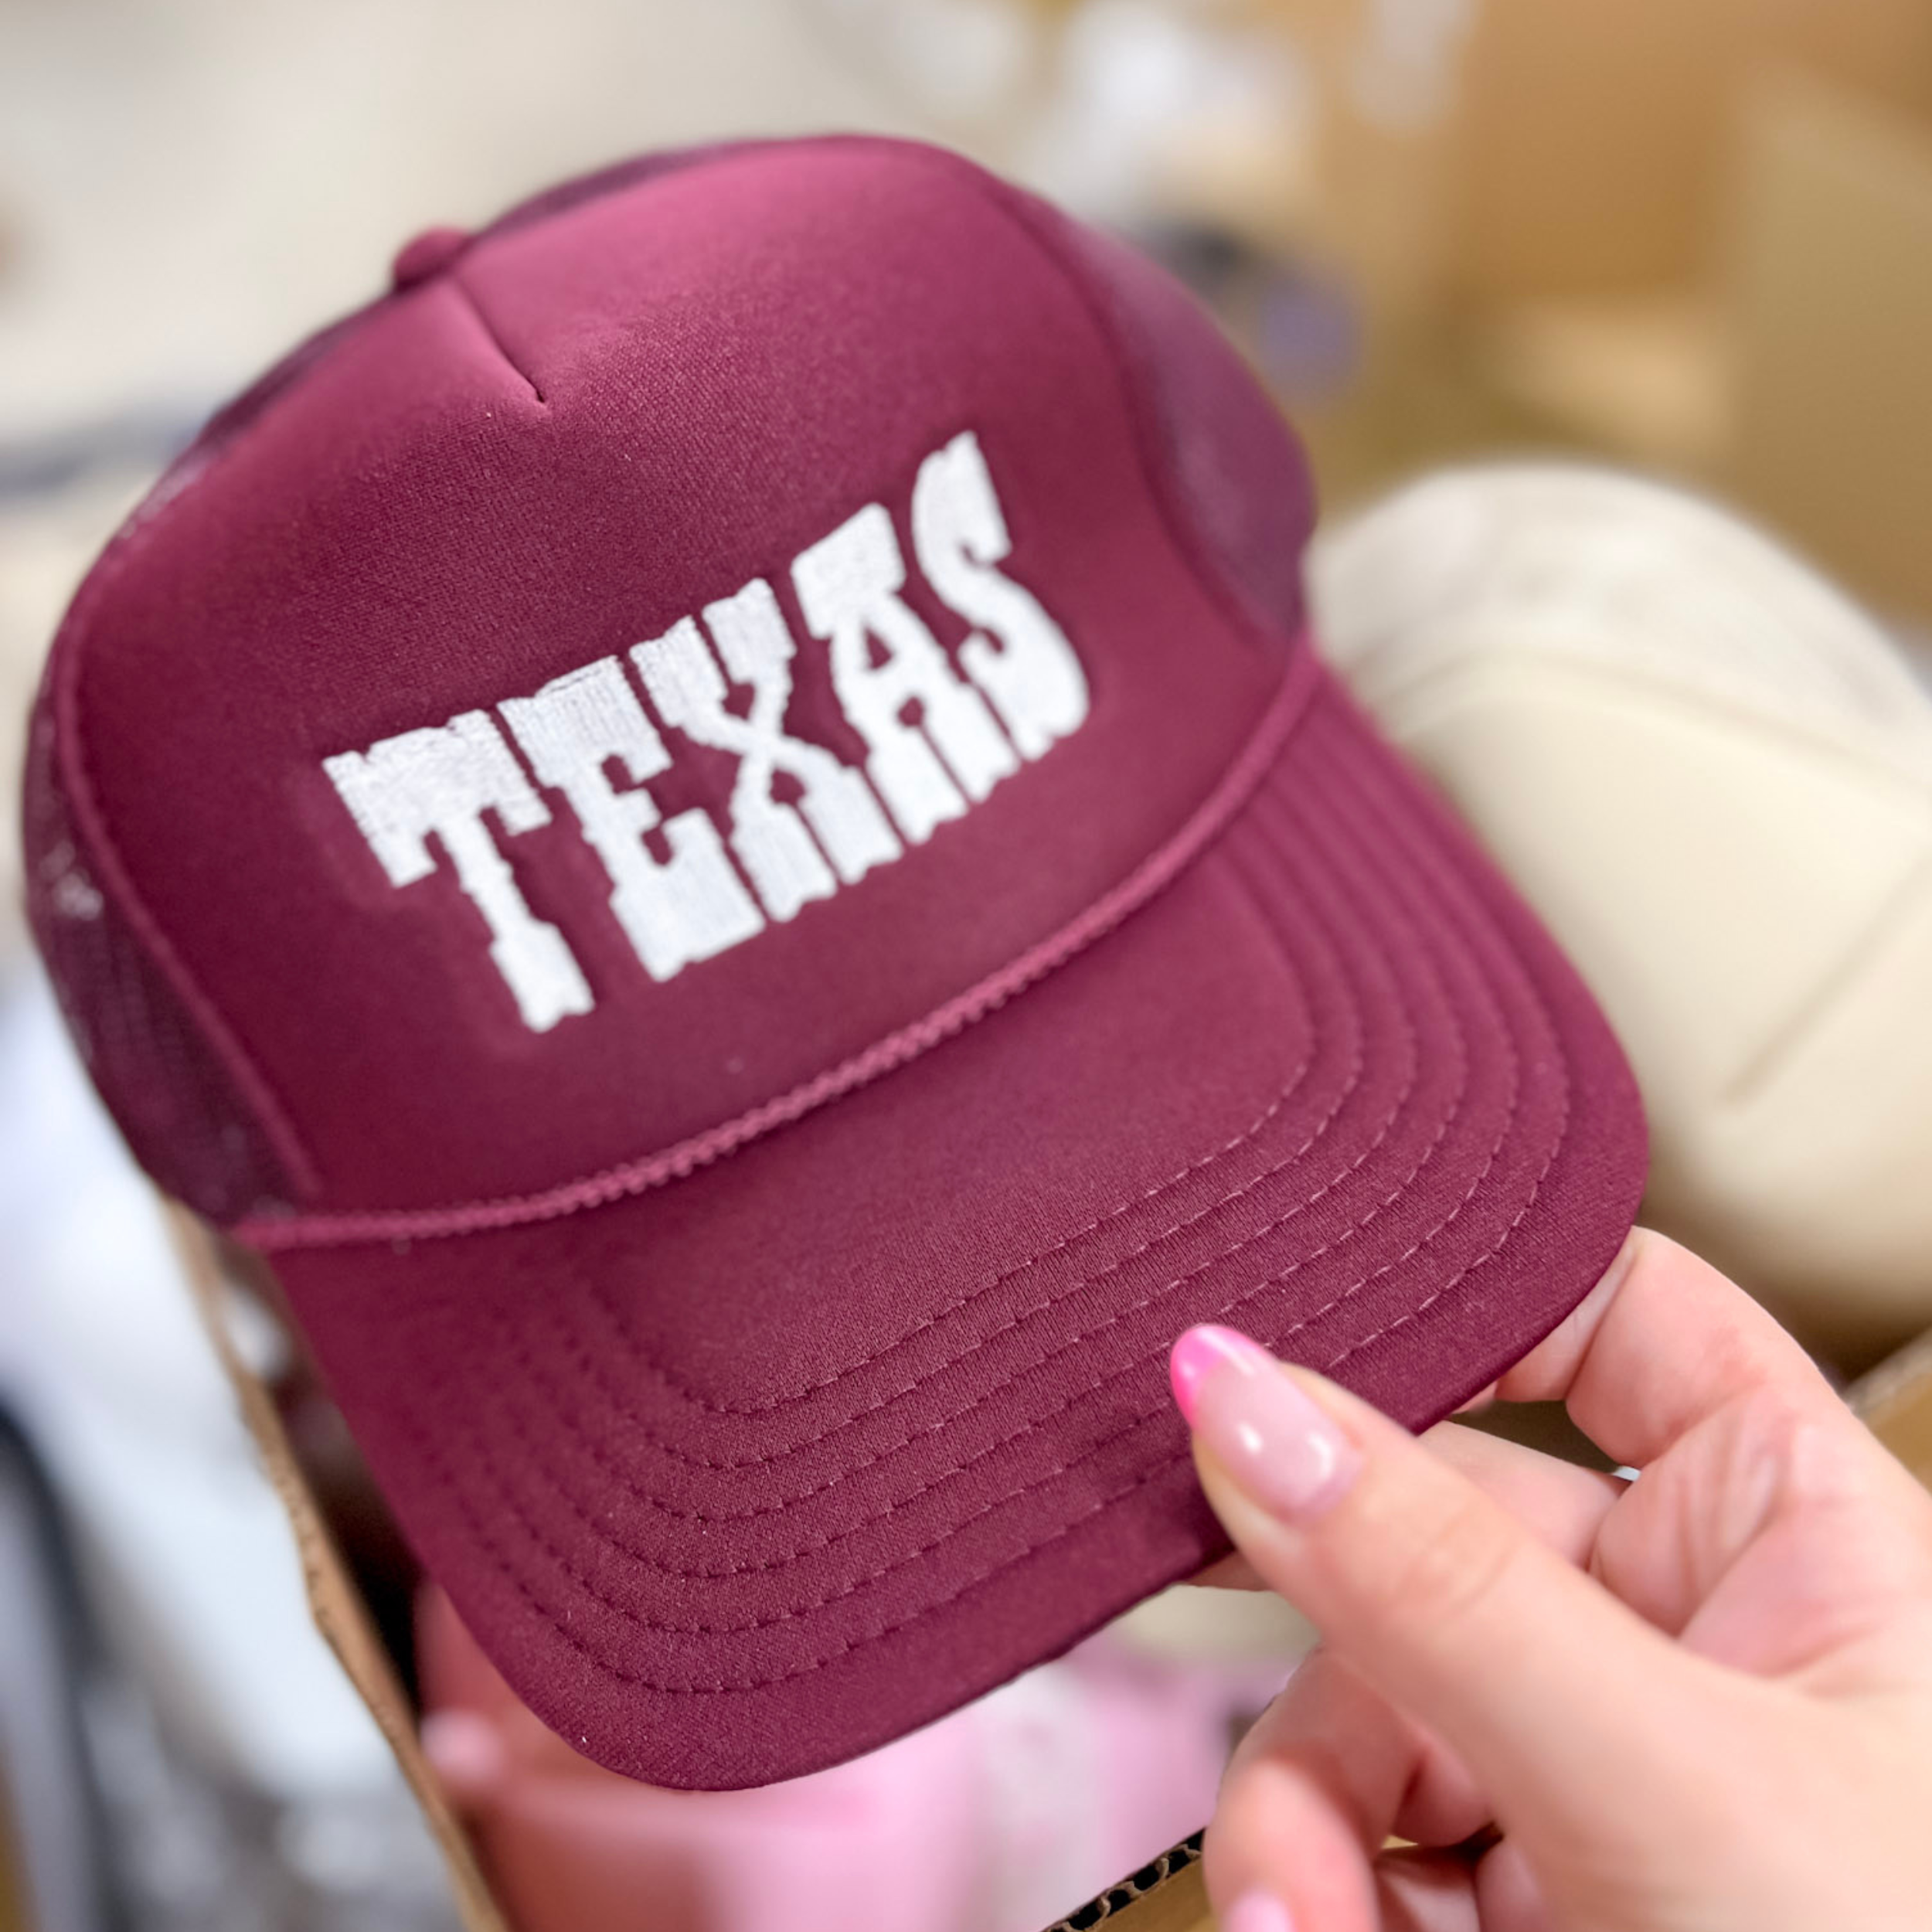 Texas Foam Trucker Hat in Maroon - Giddy Up Glamour Boutique